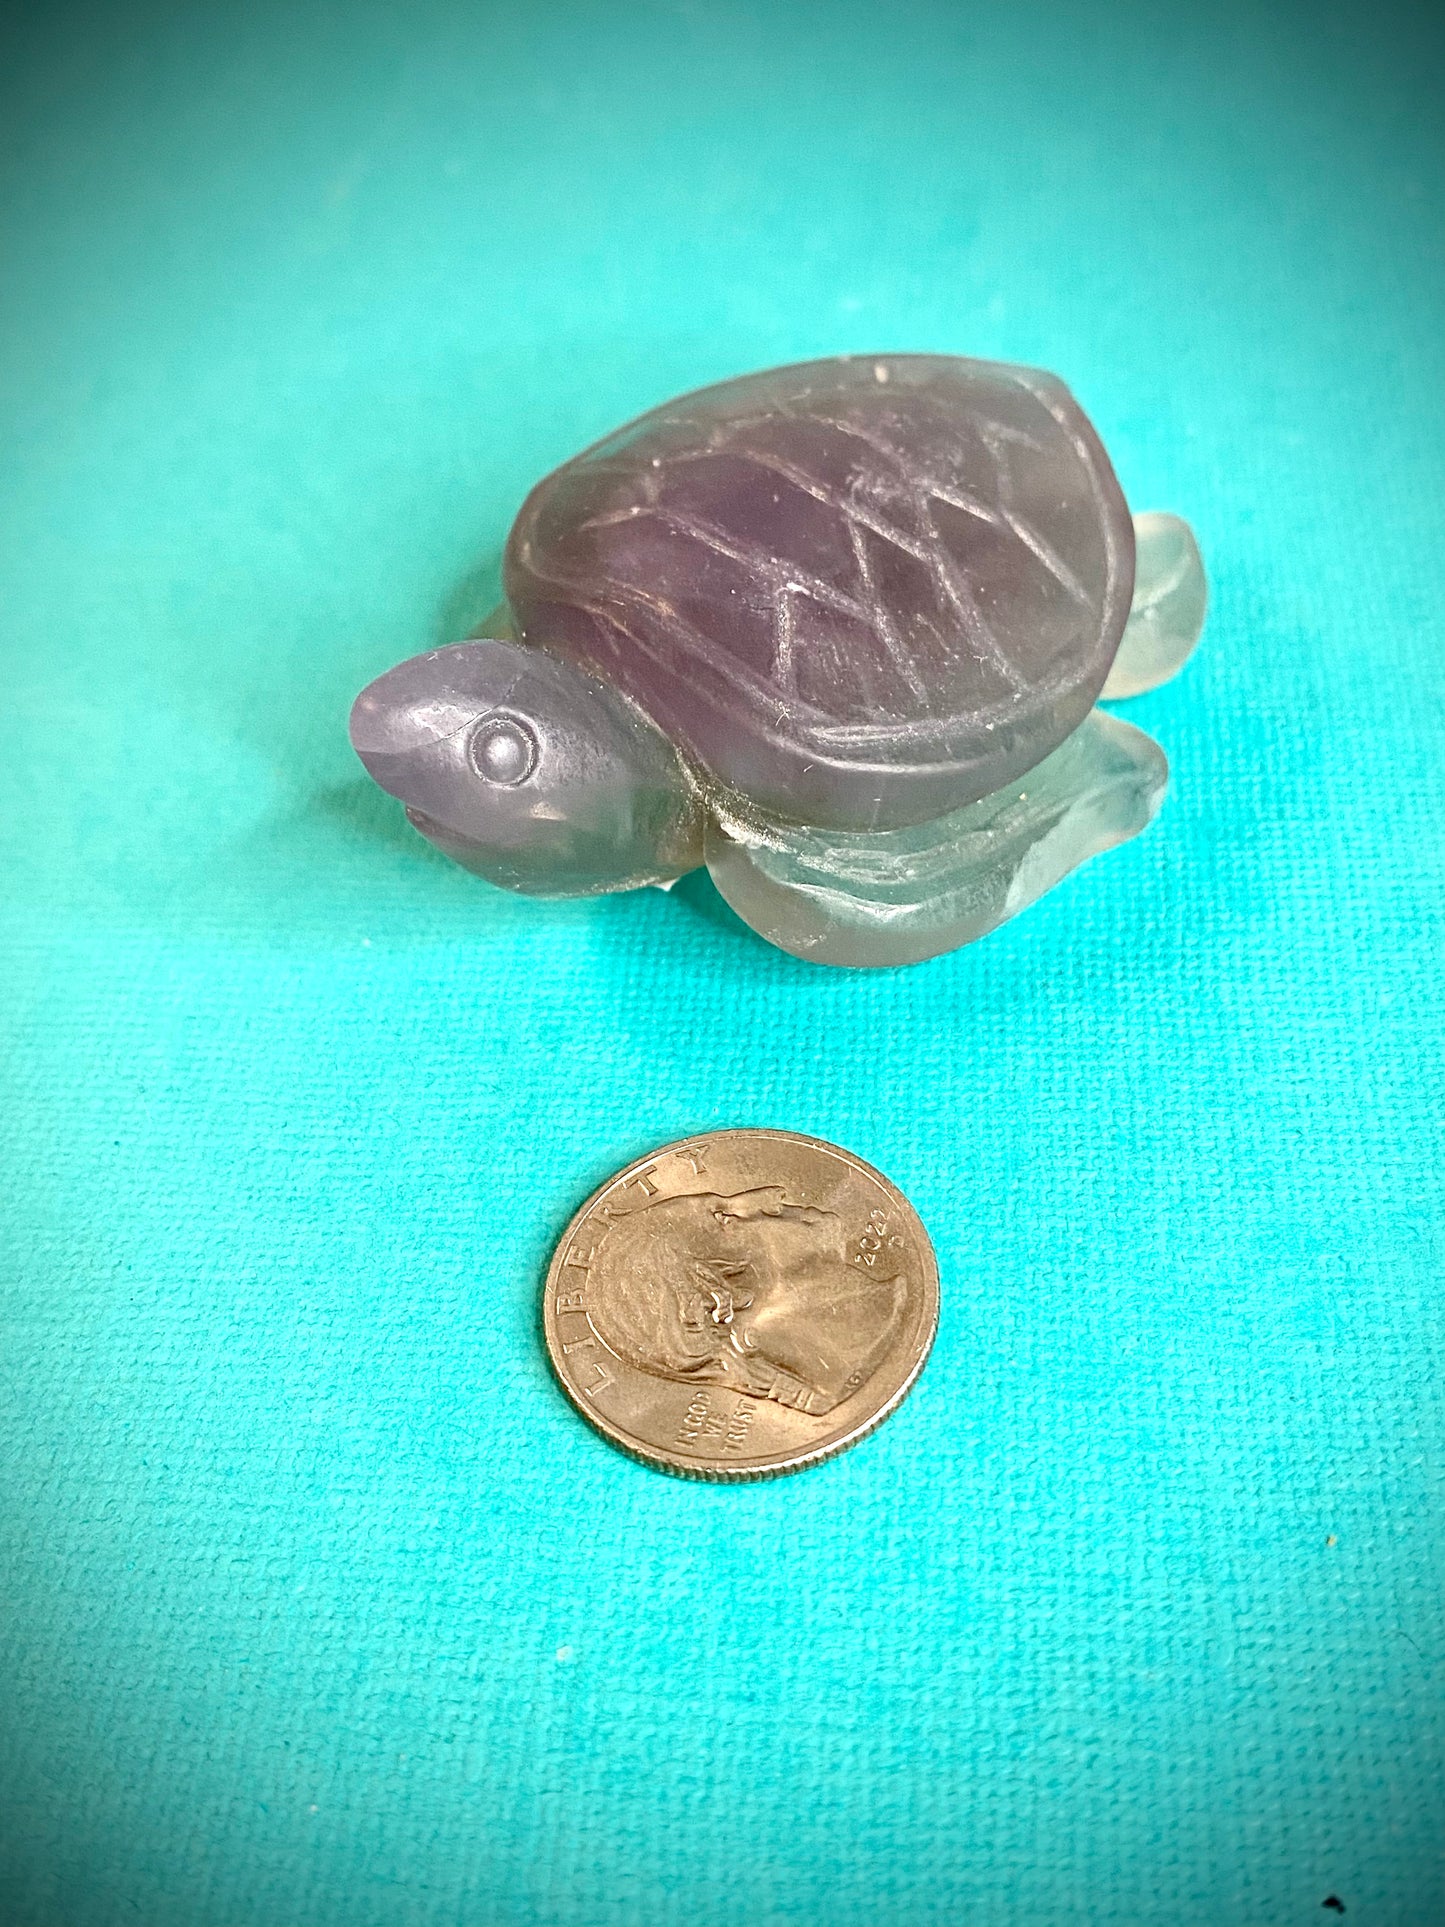 Fluorite Turtle